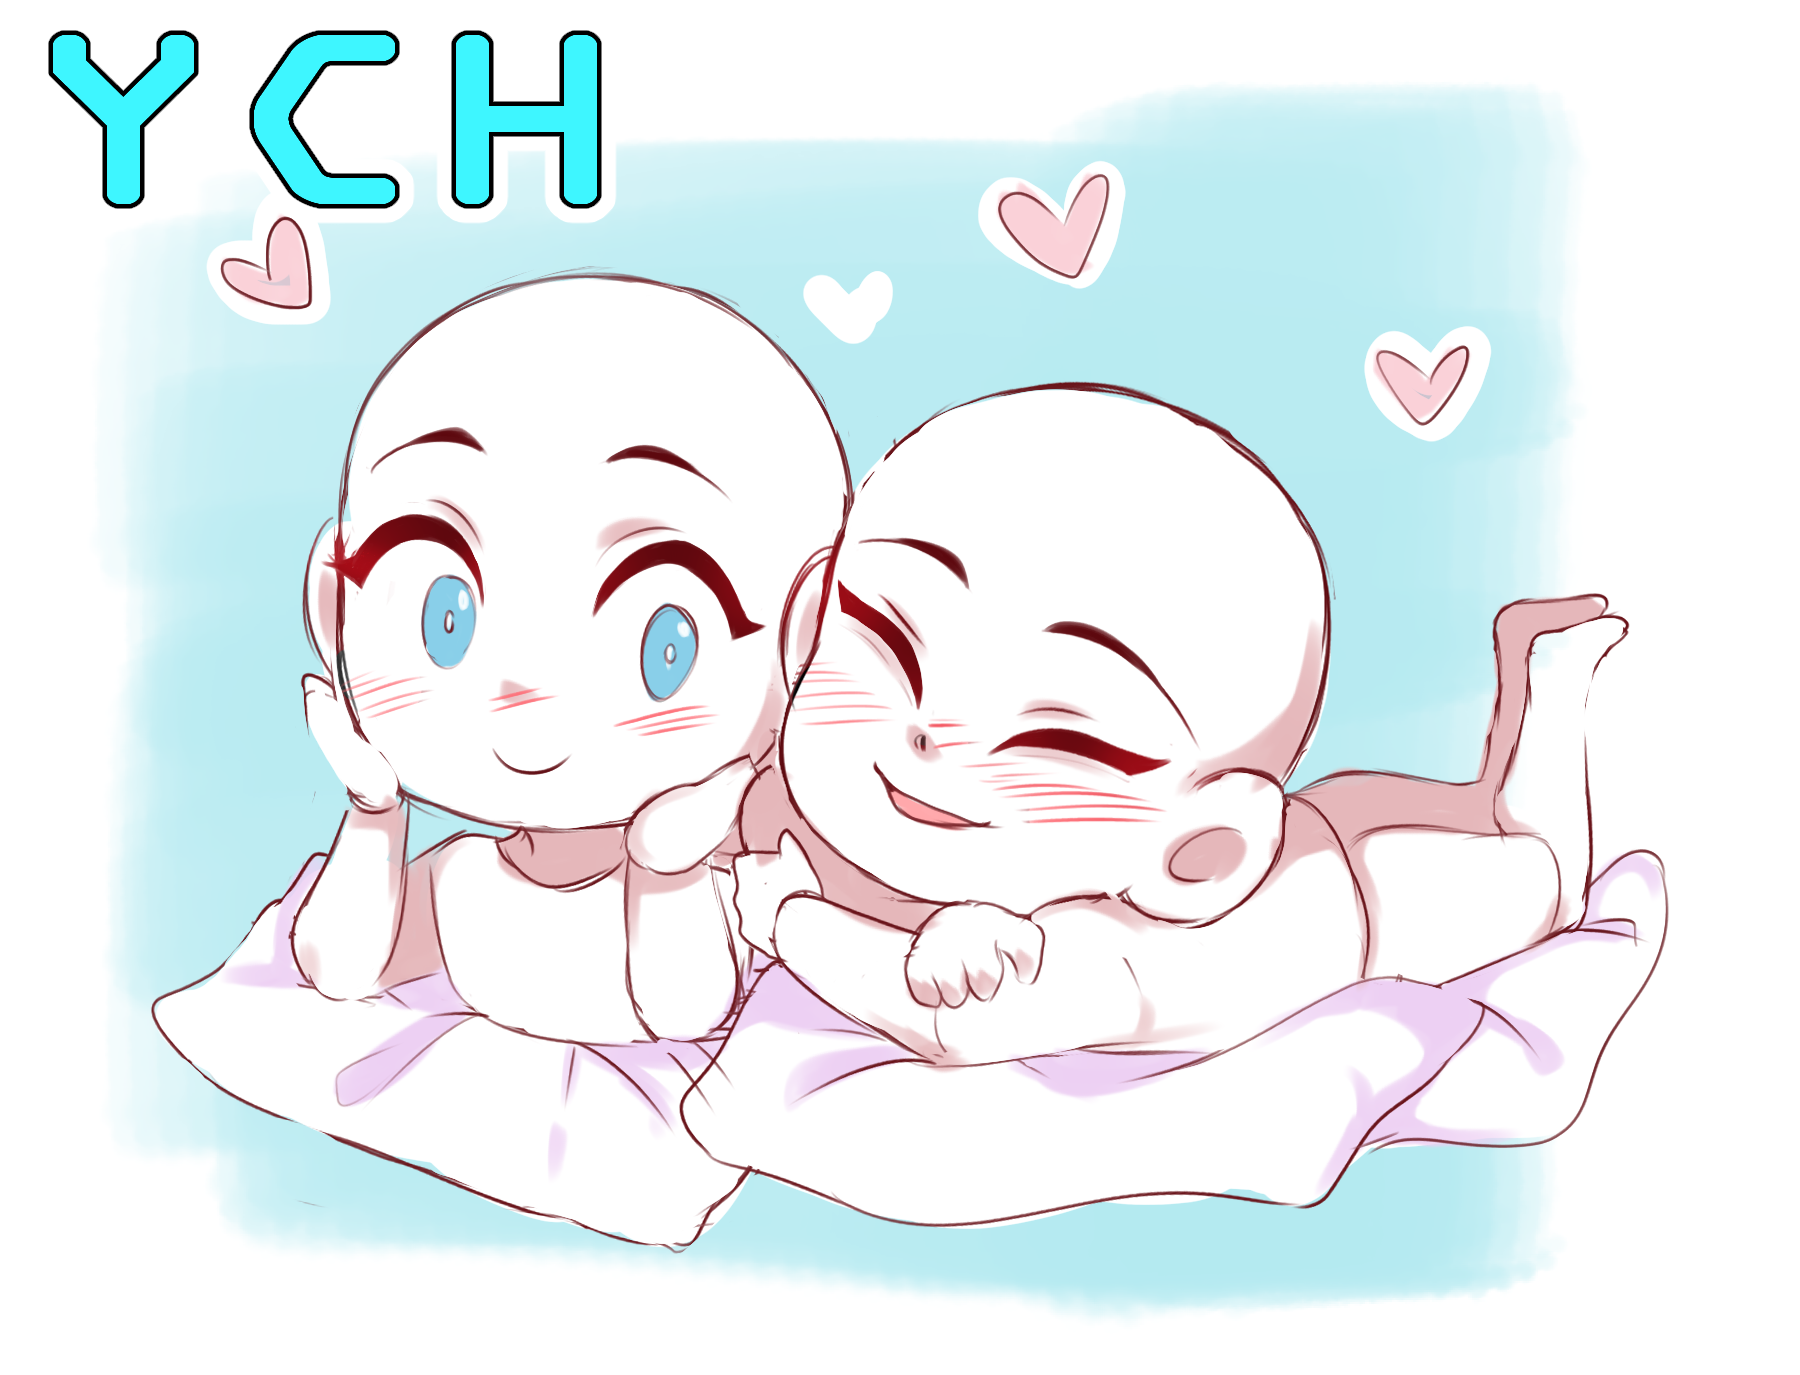 Ych chibi couple [5/5 slots open] by pinkuMe on DeviantArt